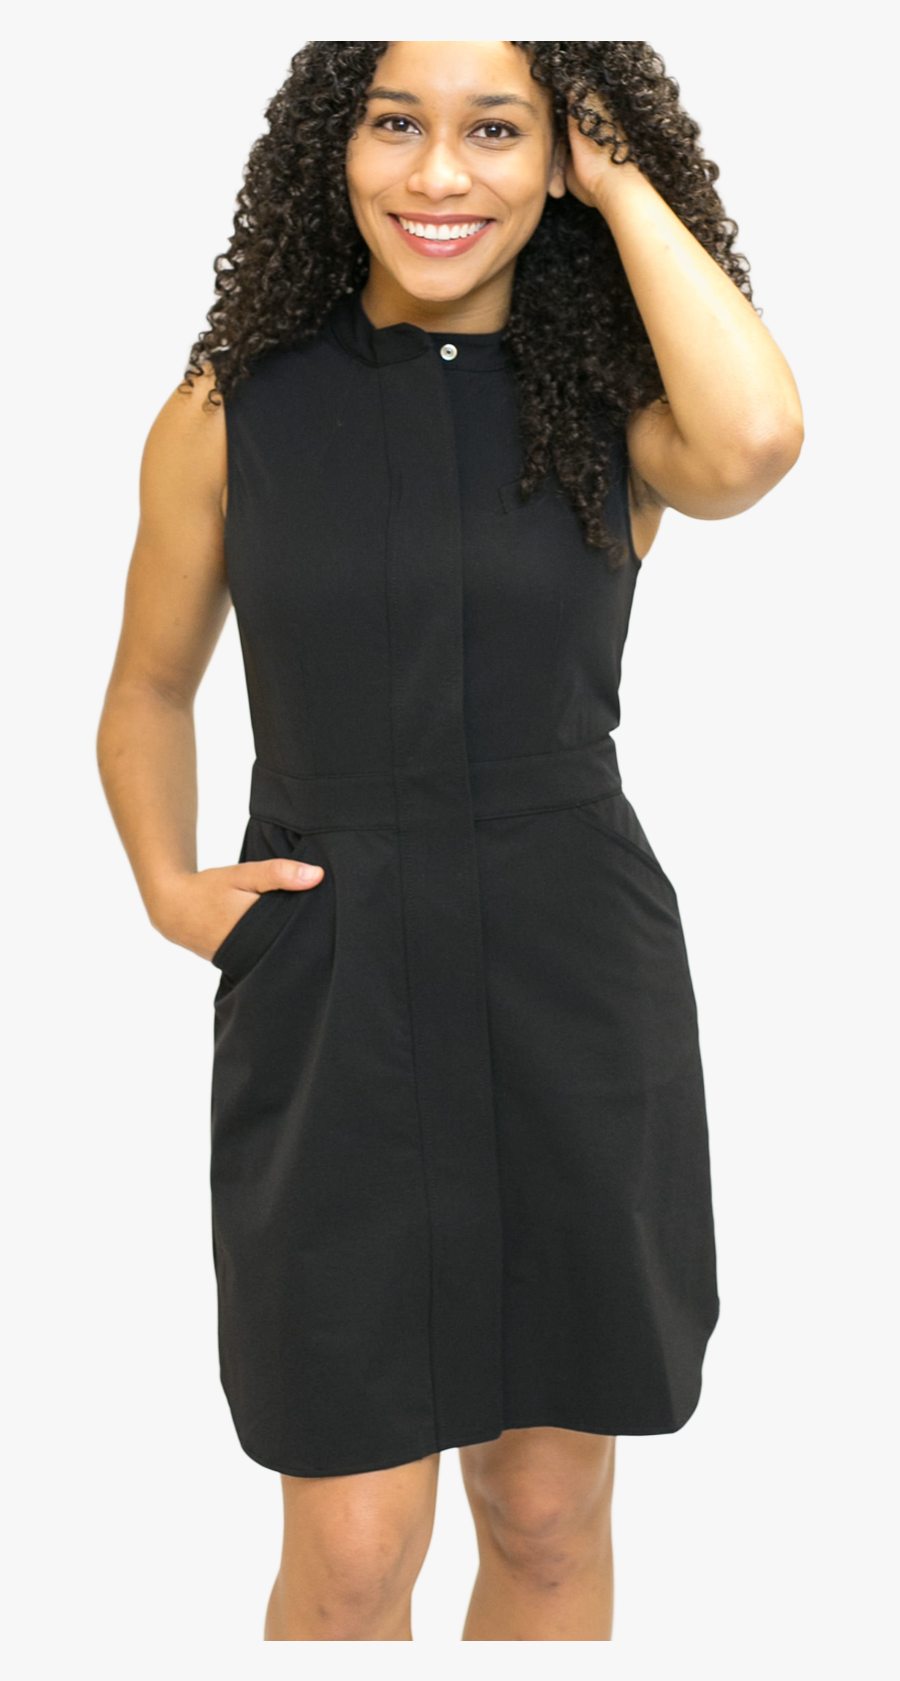 Transparent Woman In Dress Png - Little Black Dress, Transparent Clipart